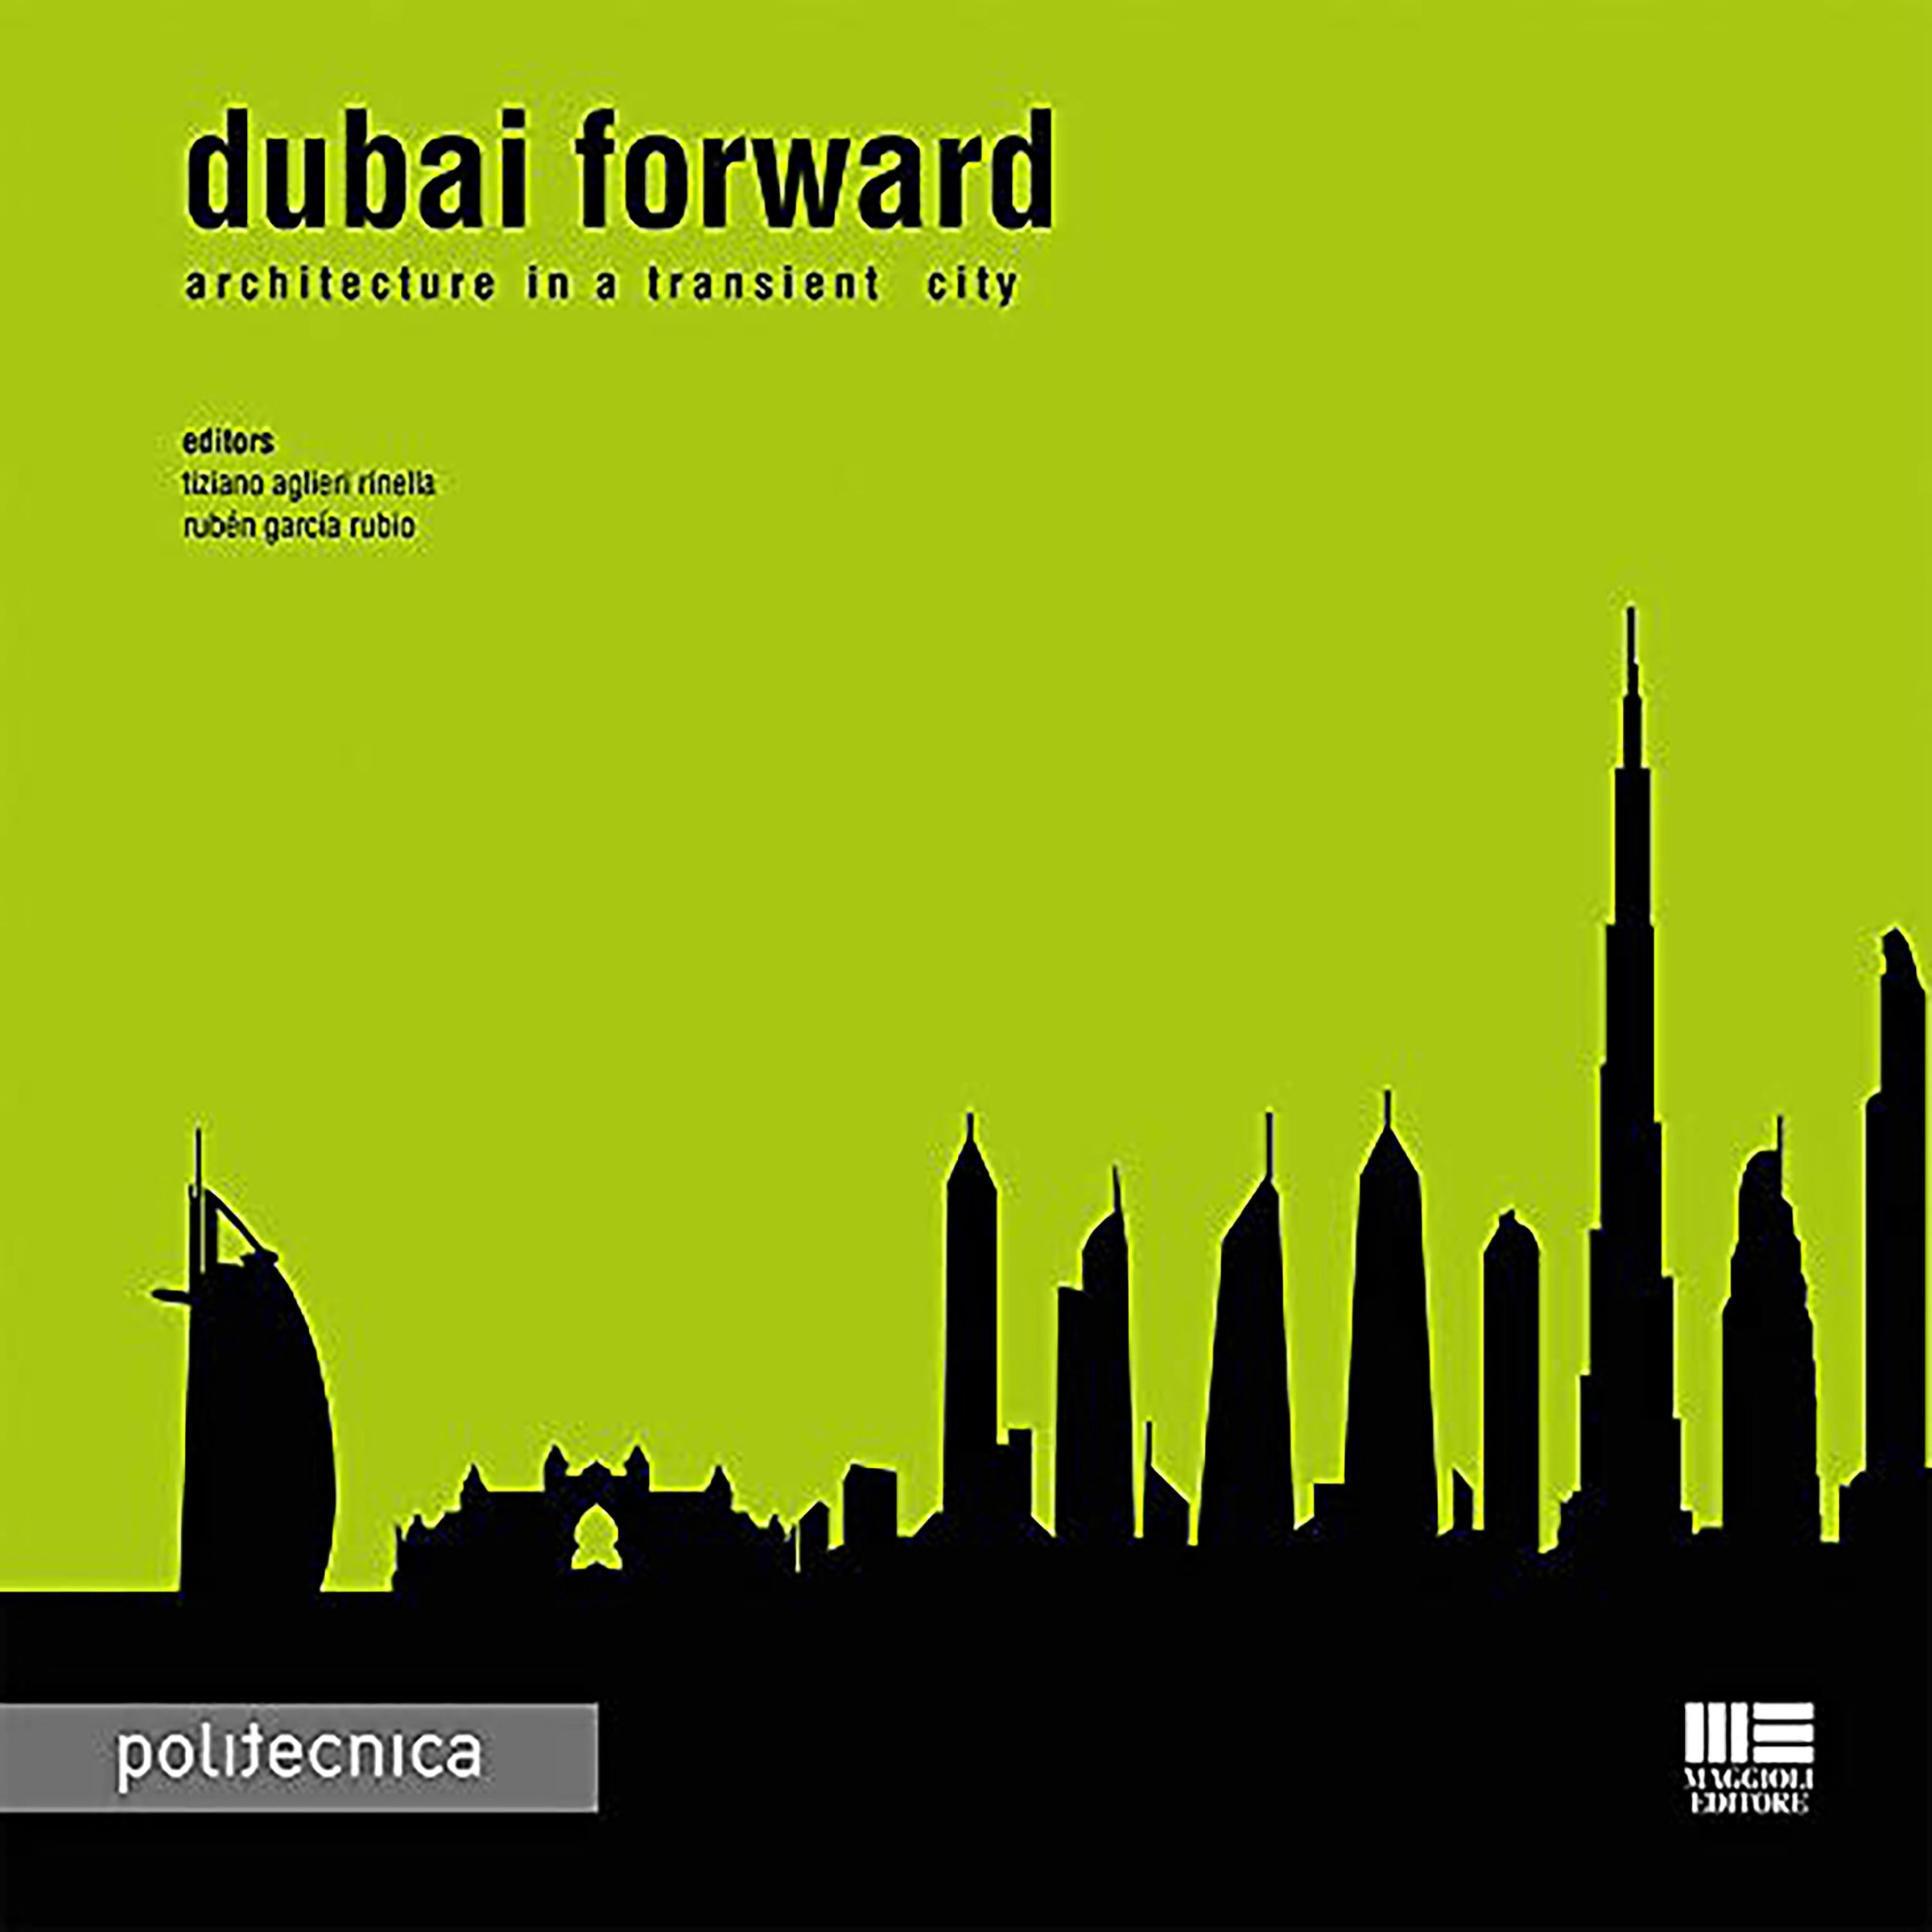 Cover of book "Dubai Forward" 